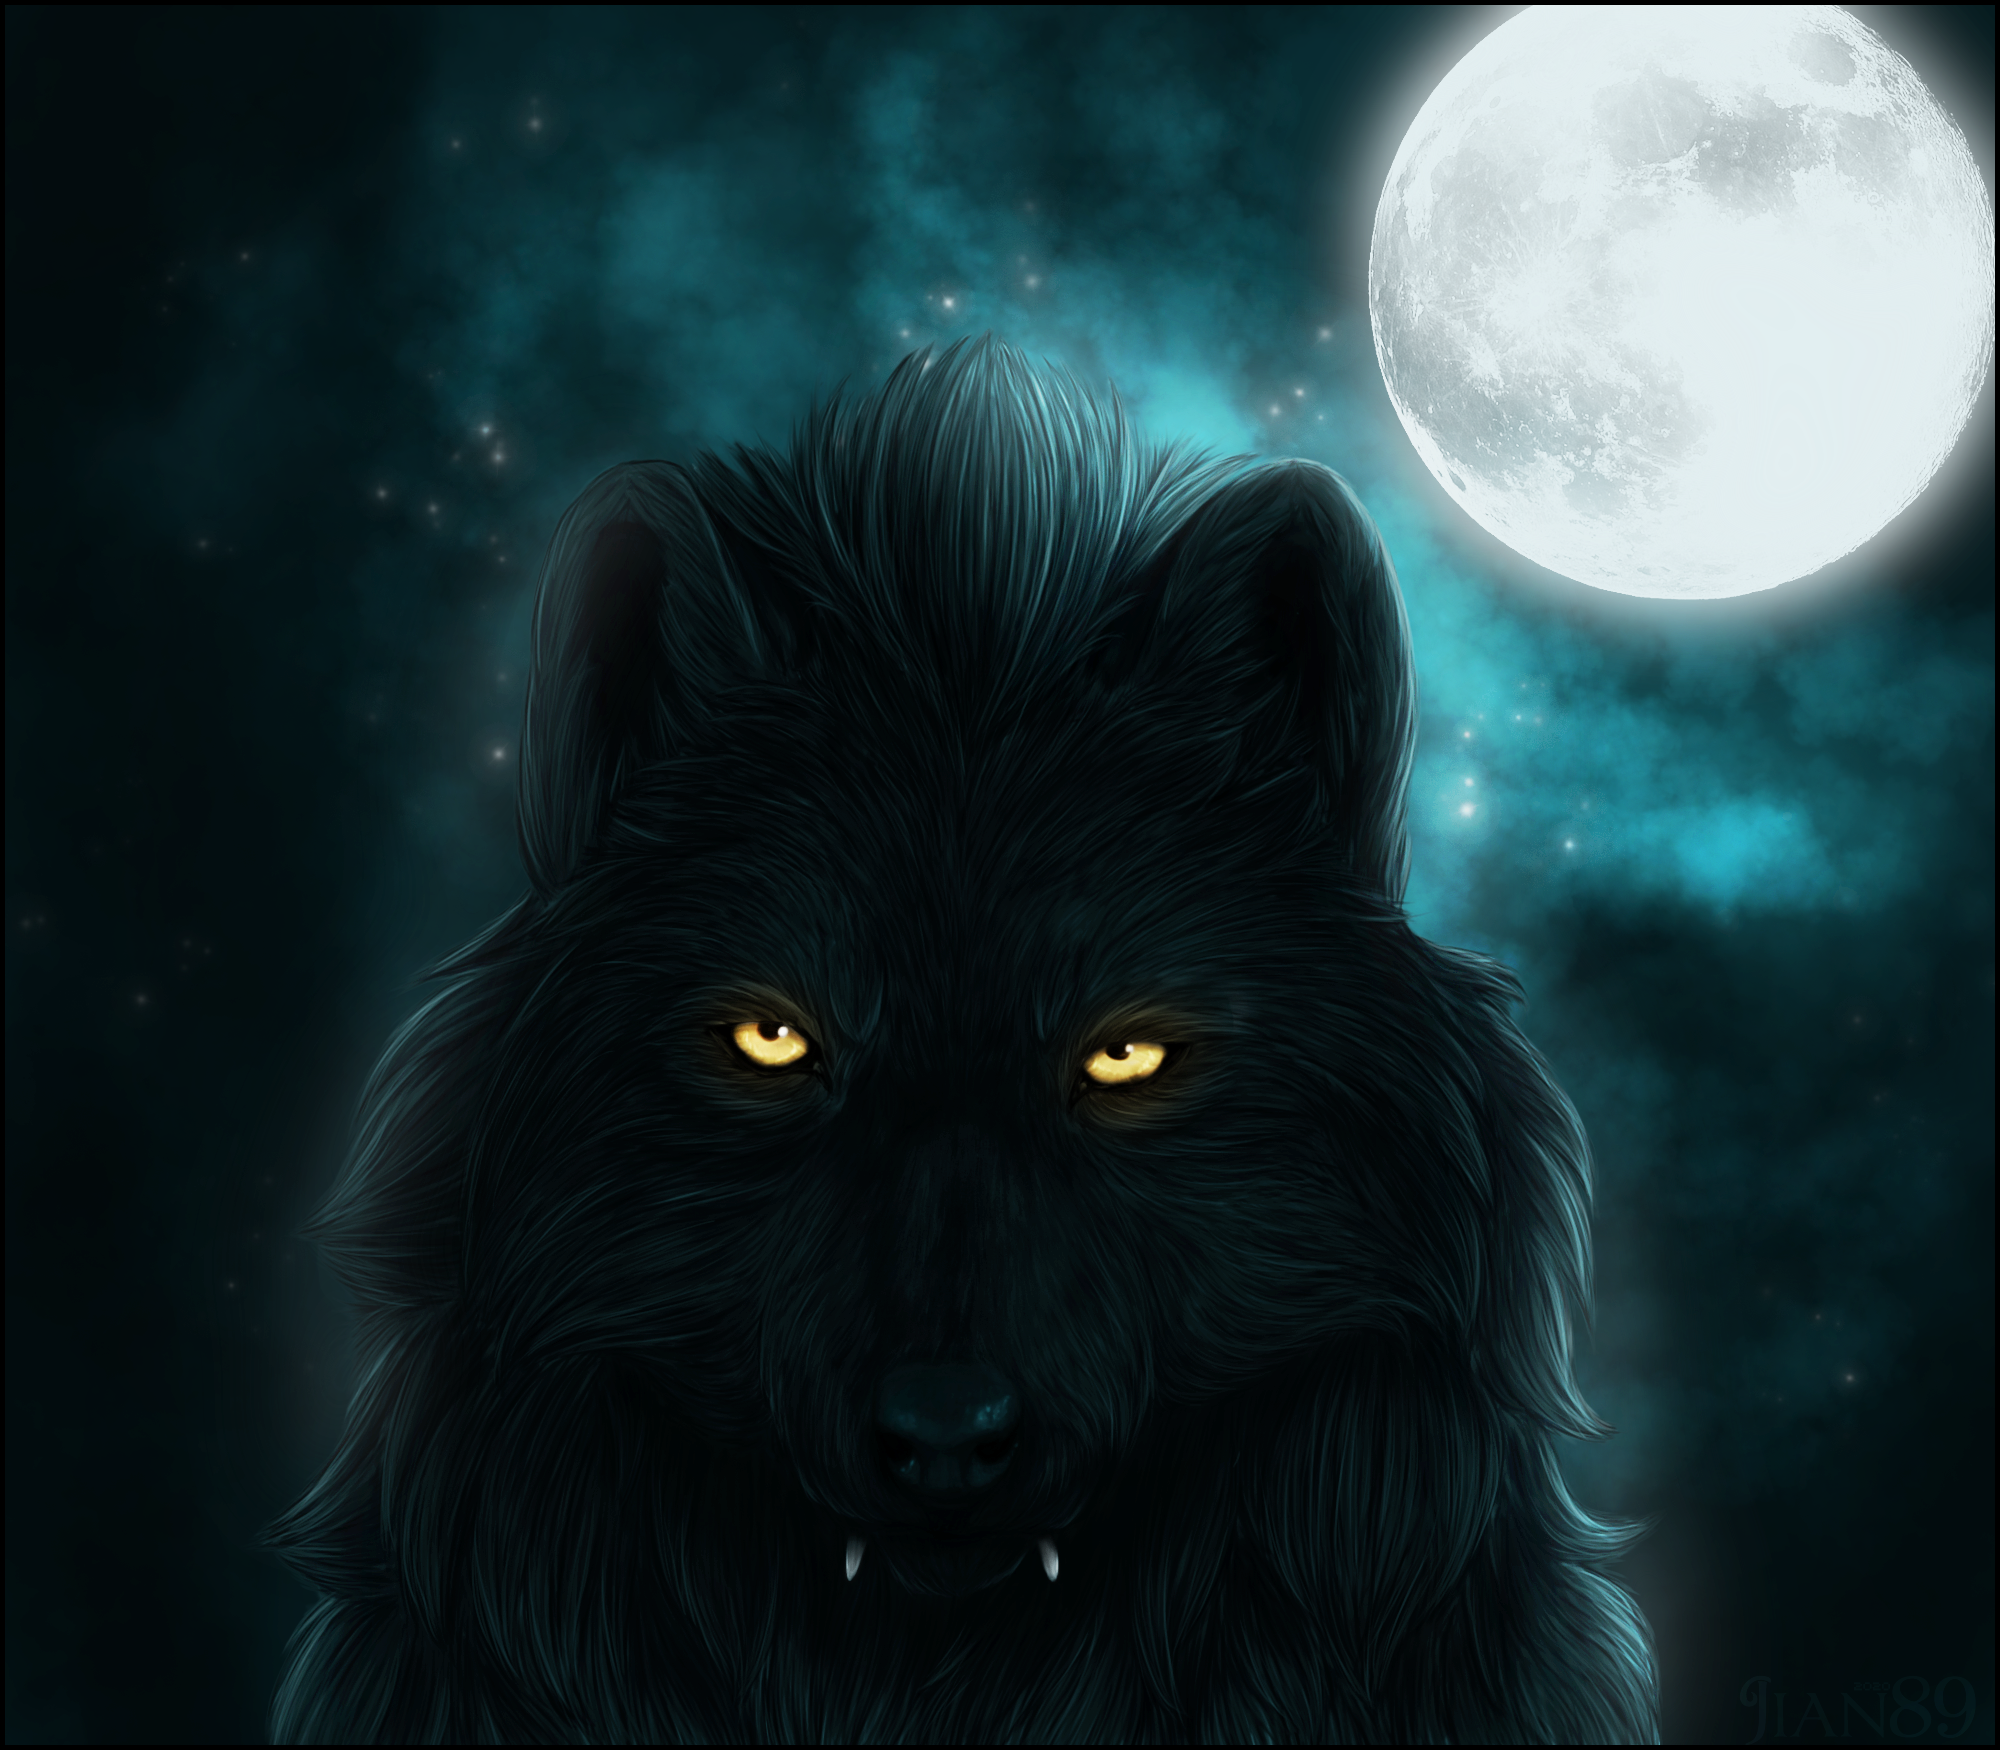 Viewing Dark_Moon_Wolf989's profile, Profiles v2